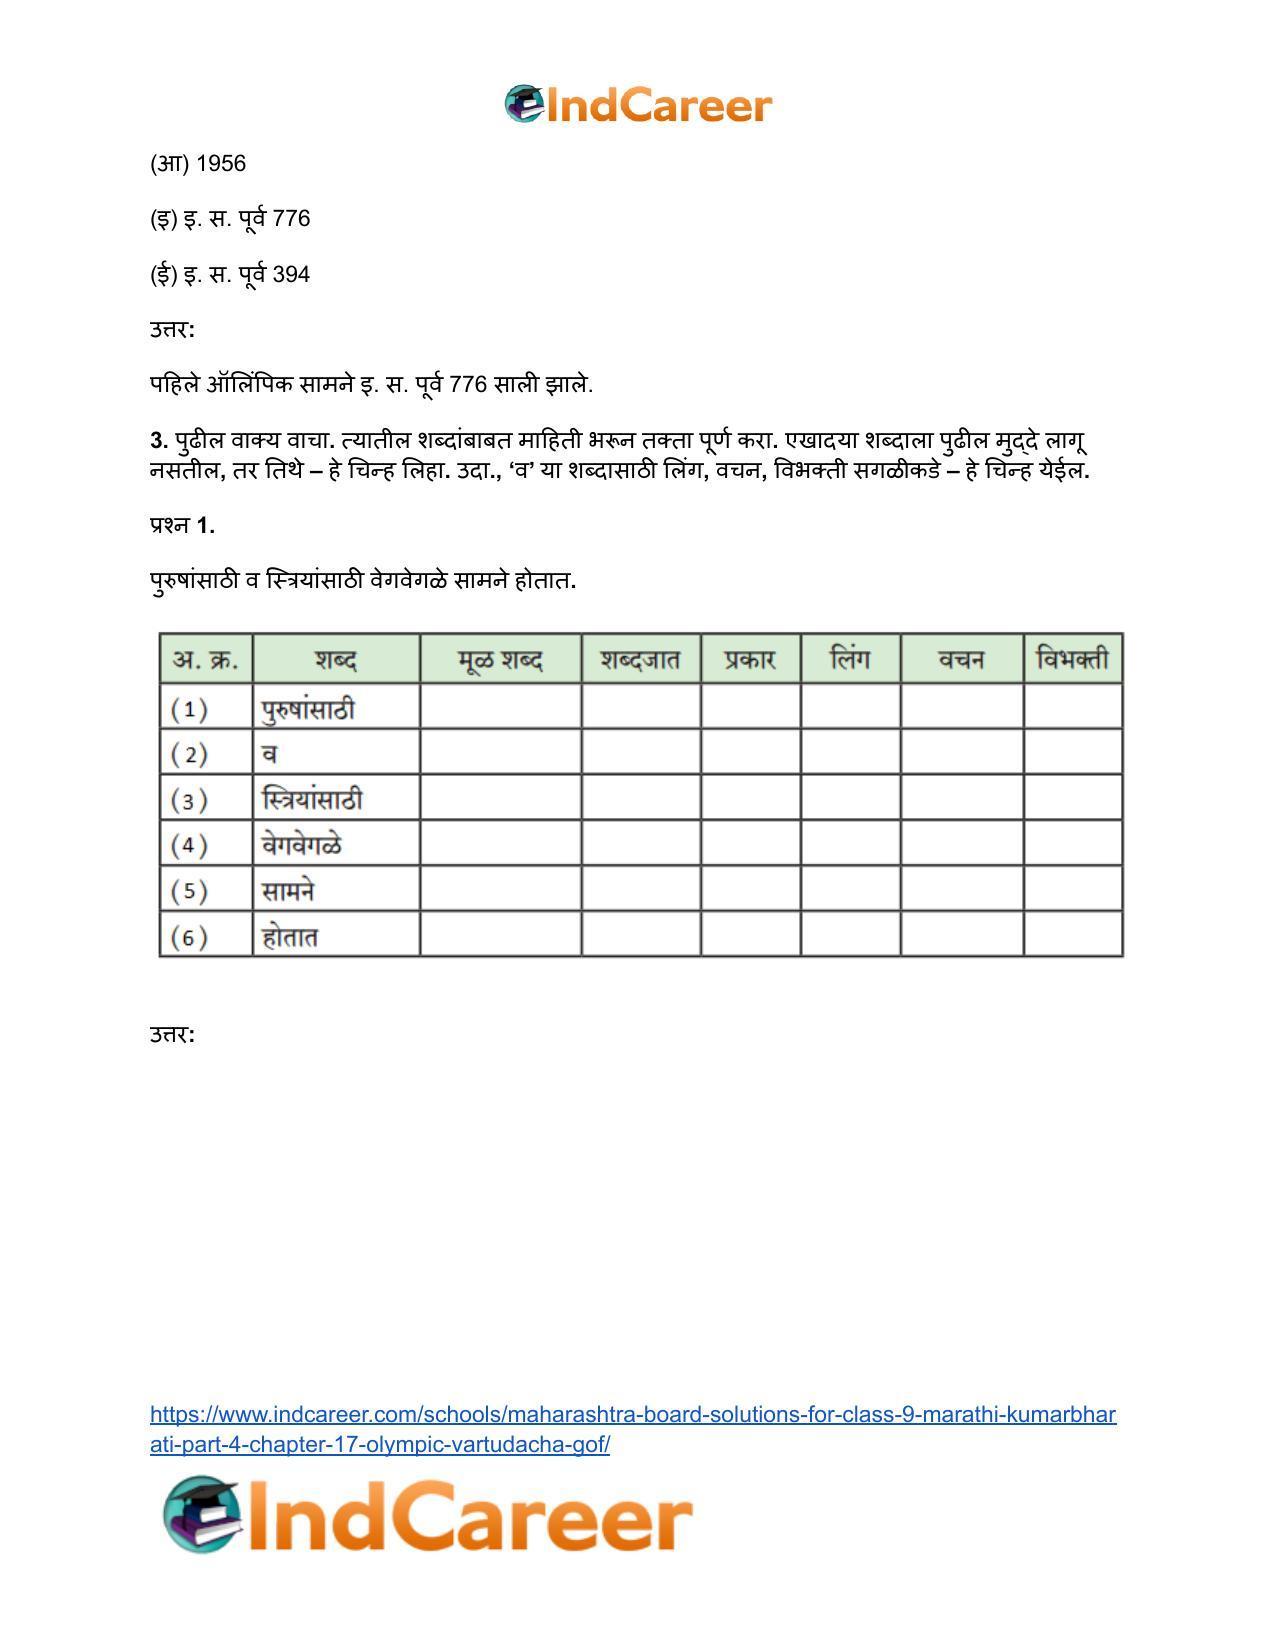 Maharashtra Board Solutions for Class 9- Marathi Kumarbharati (Part- 4): Chapter 17- ऑलिंपिक वर्तुळांचा गोफ - Page 5